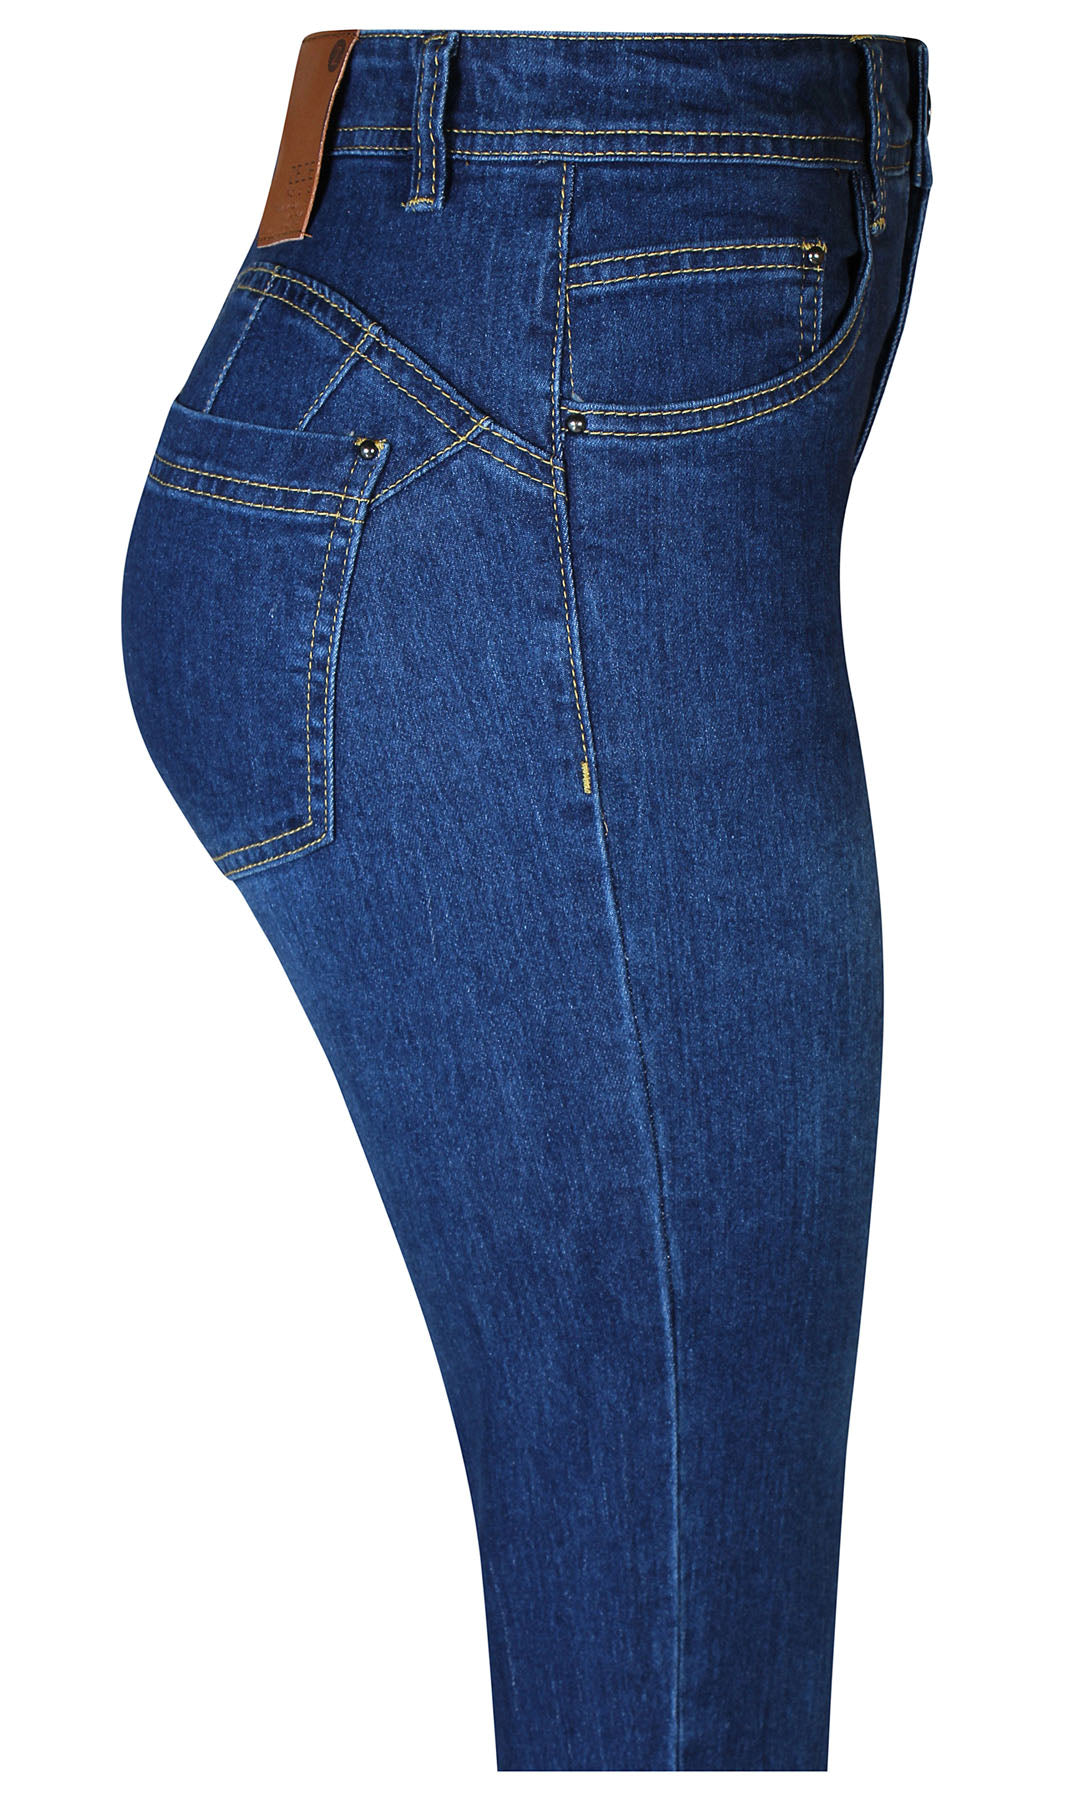 Shape 2-575 - Pants - Ripped blue